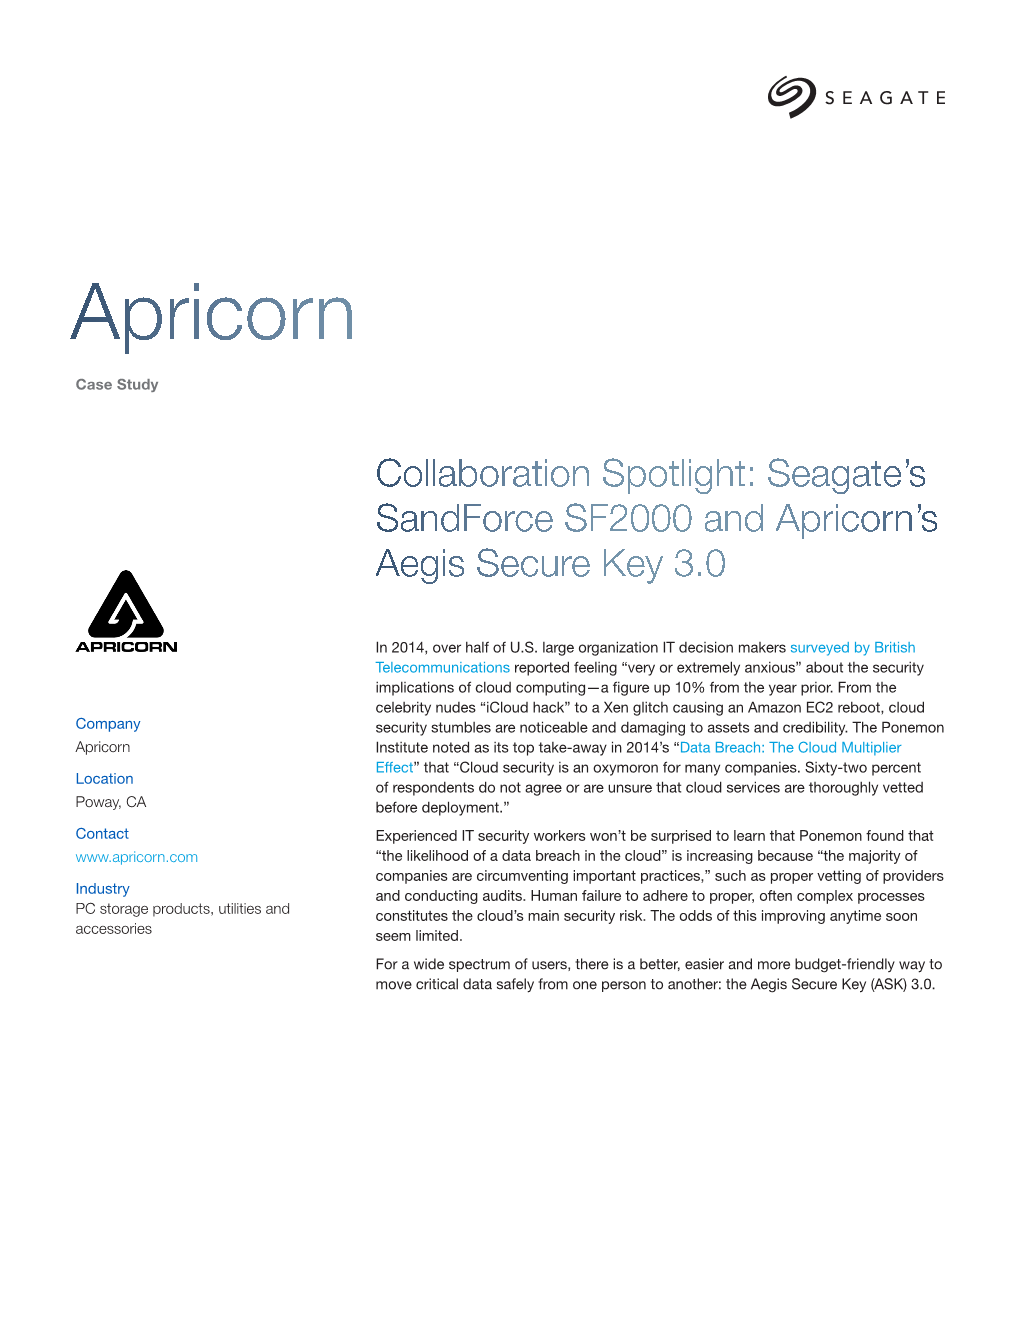 Seagate's Sandforce SF2000 and Apricorn's Aegis Secure Key